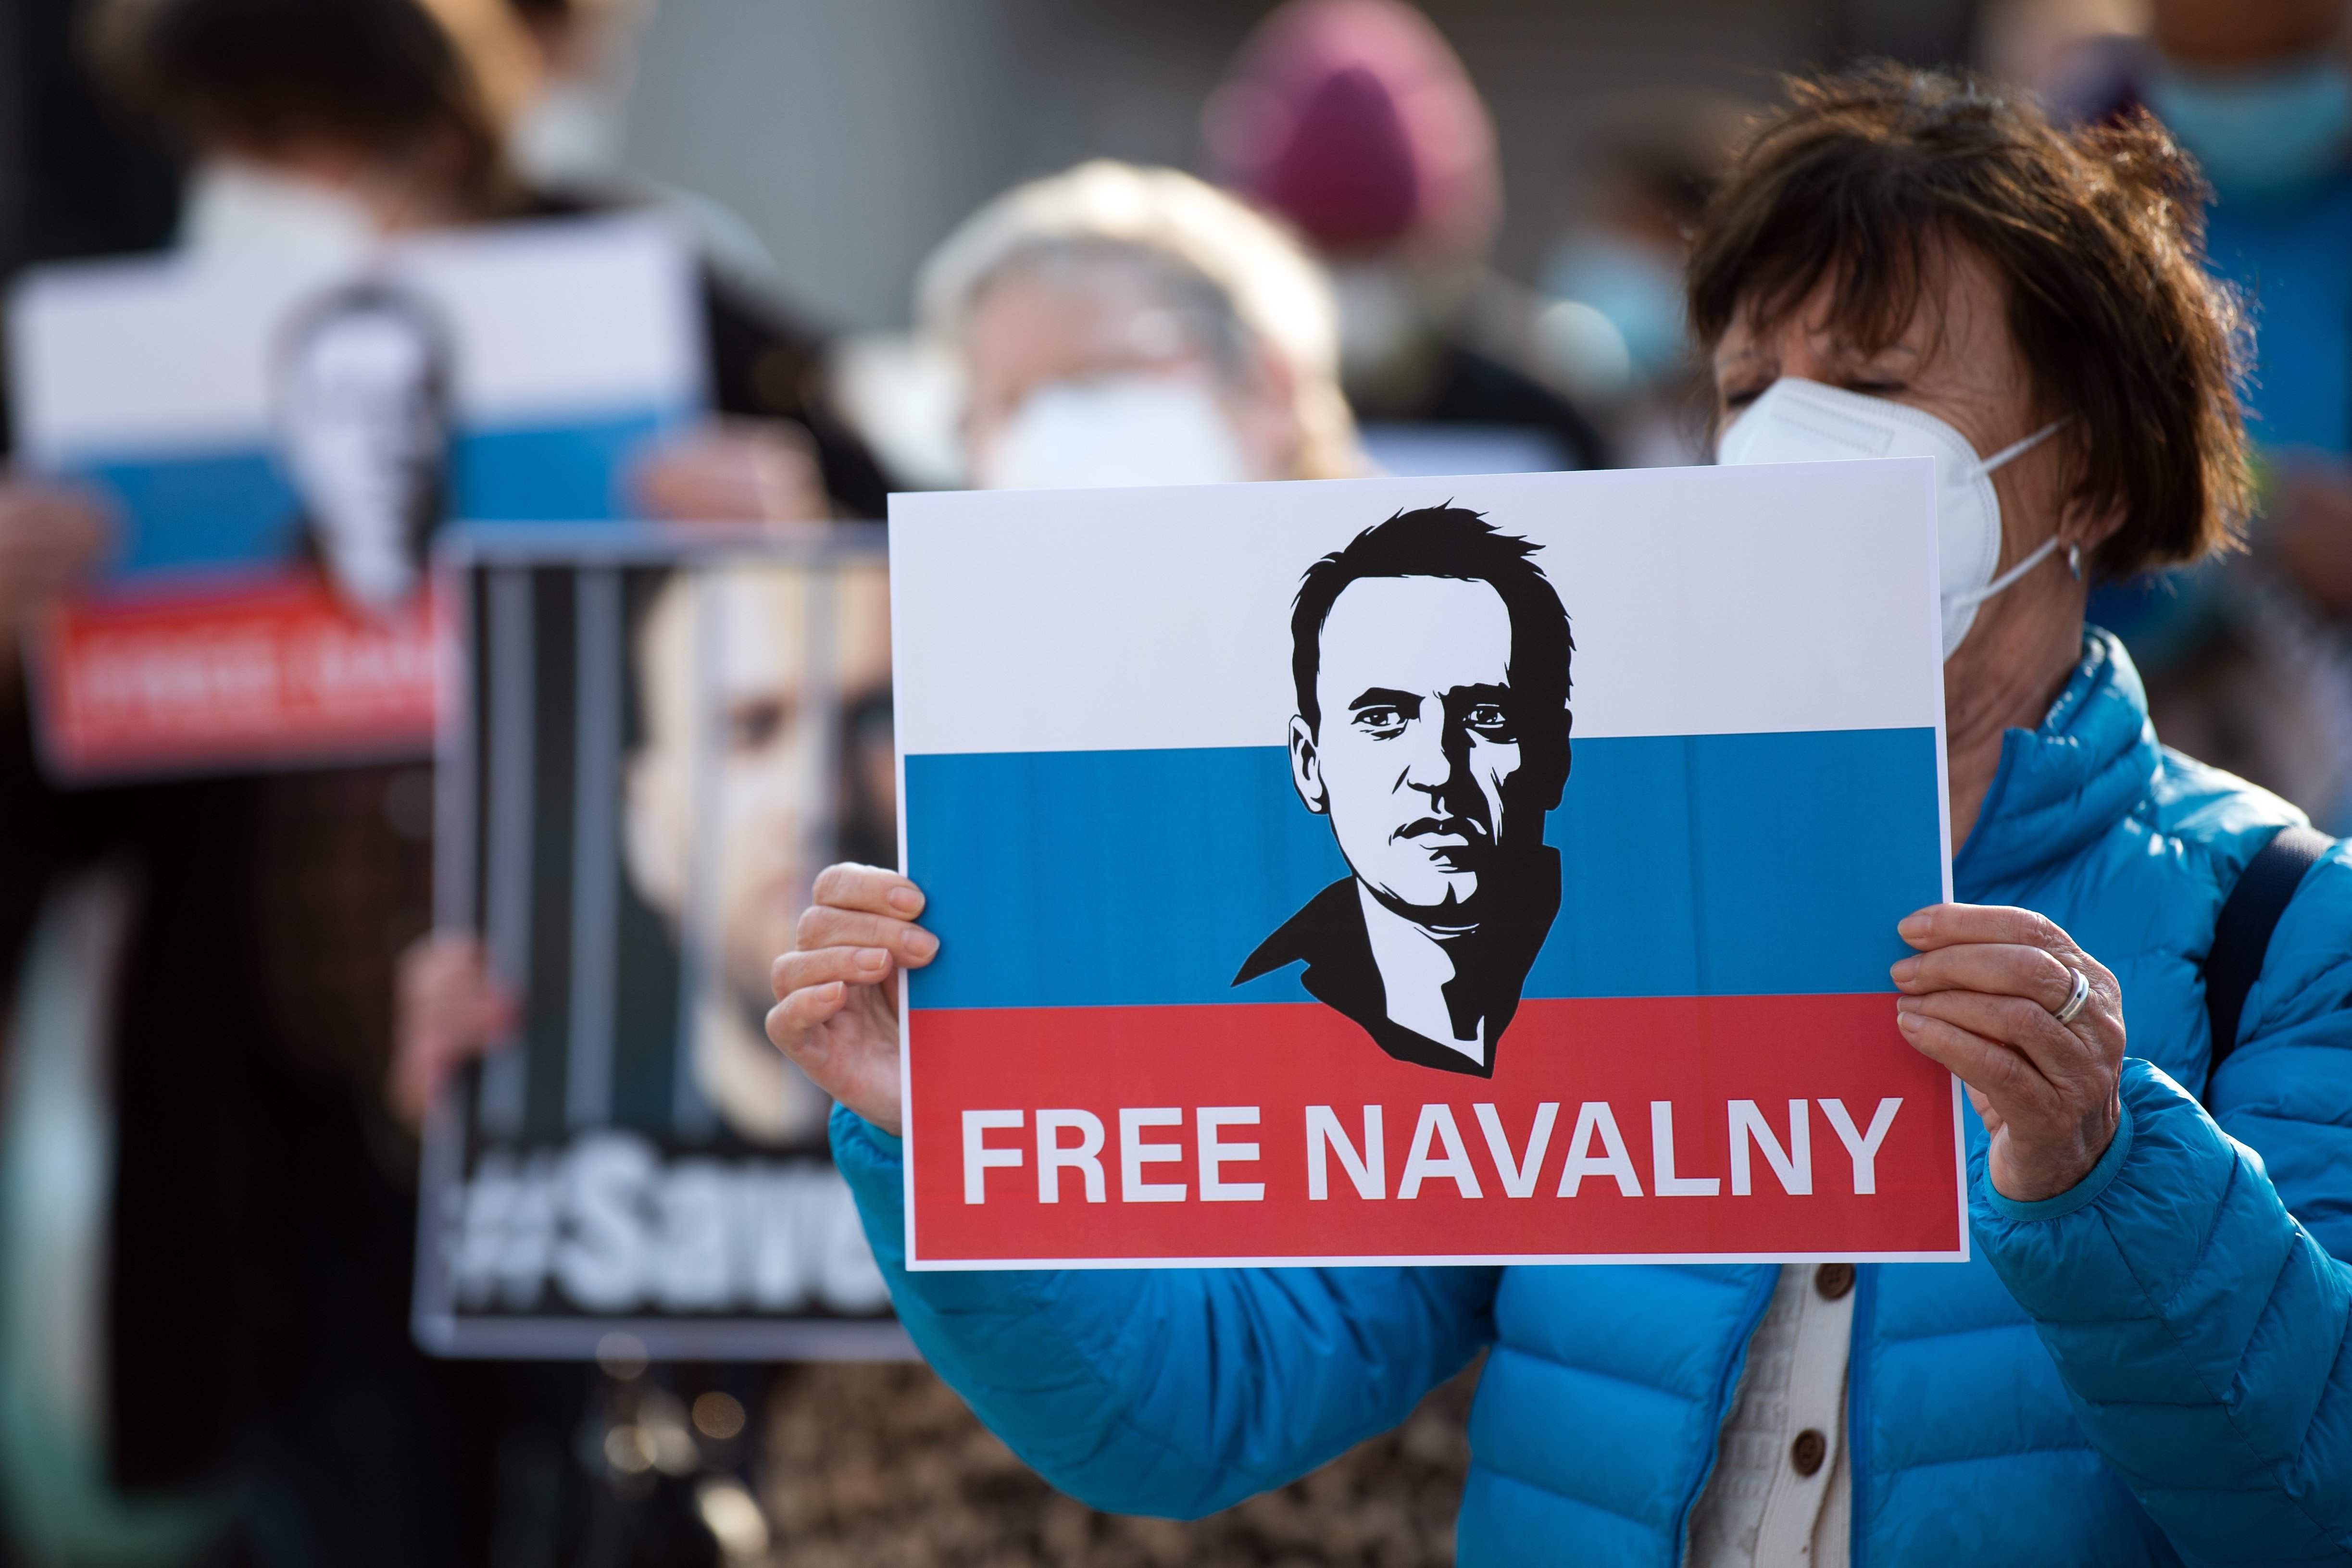 Protesta Berlin contra nou judici|seny a Navalni EP